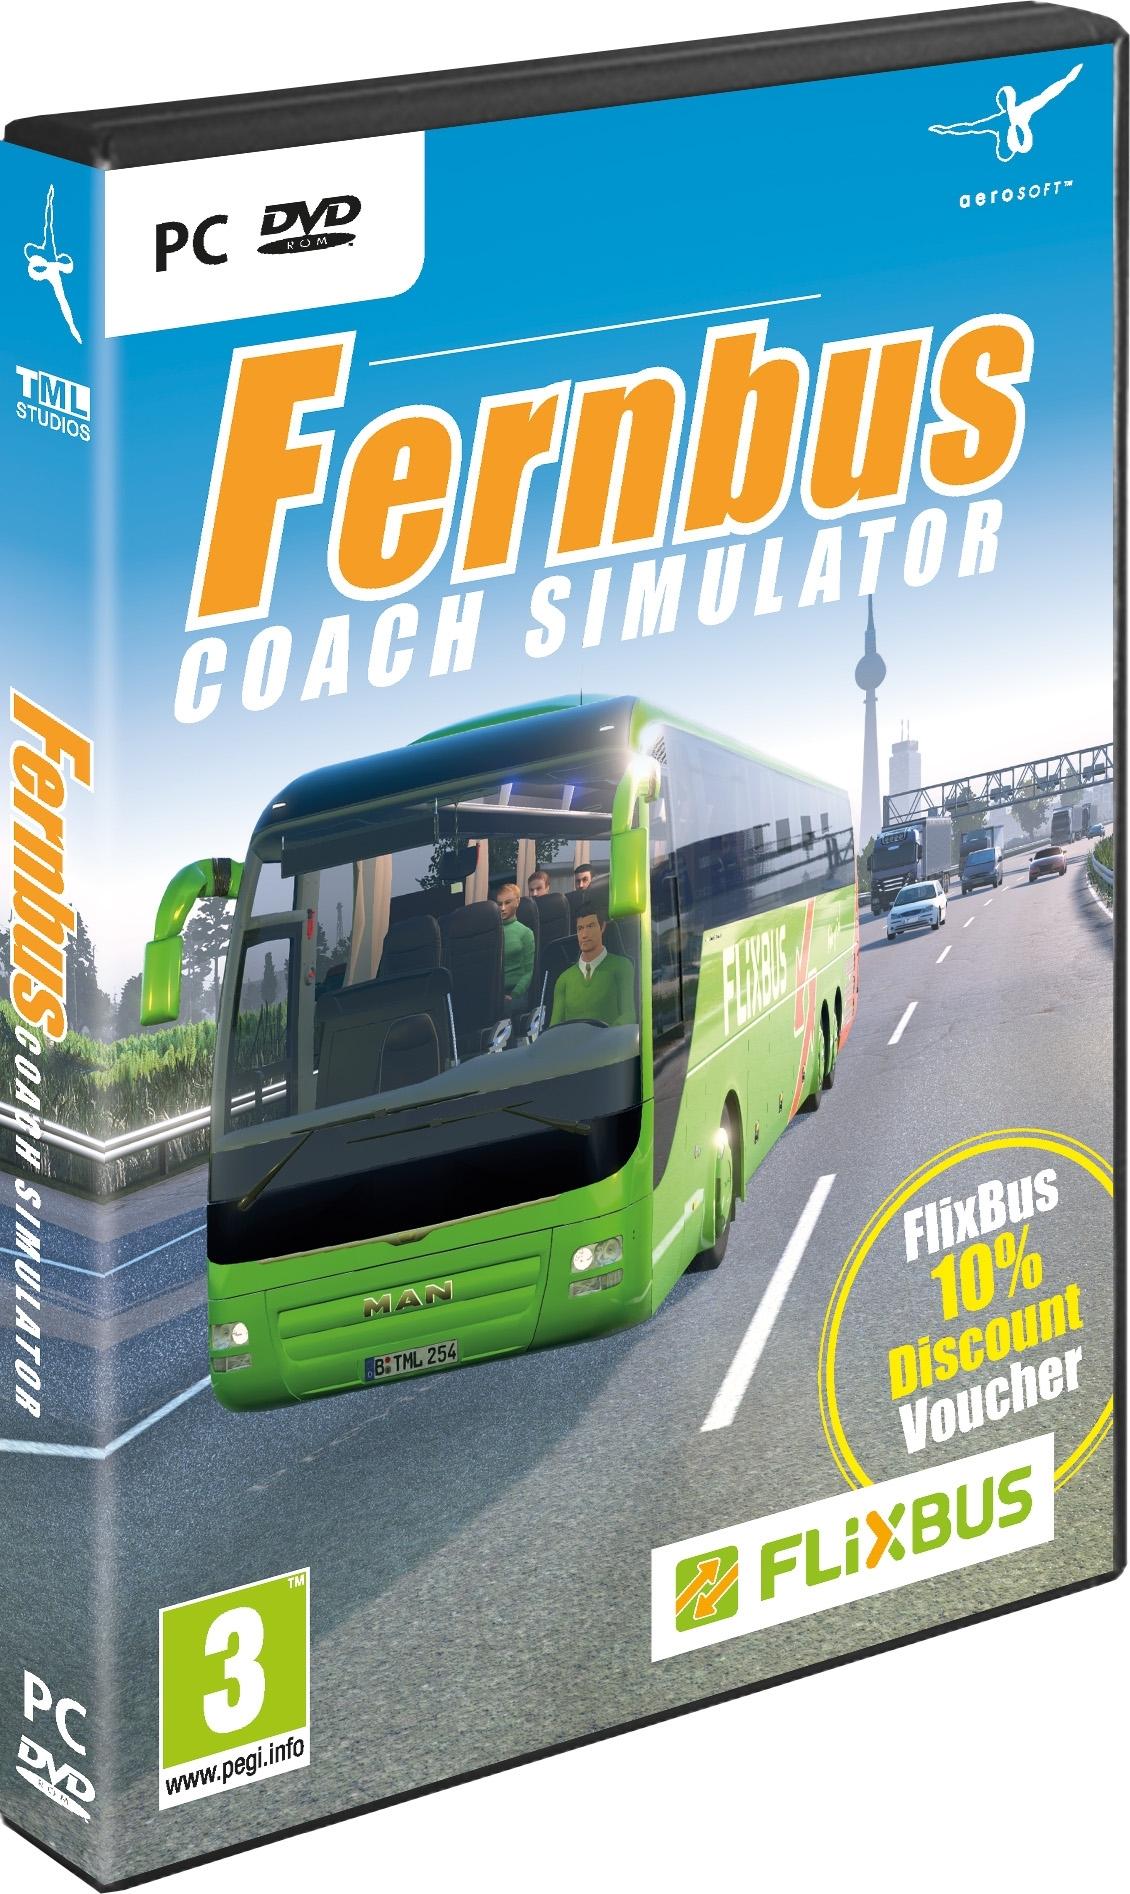 Fernbus Coach Simulator | 13397 (c3ffb6cb-bd57-5b42-8e35-b3d3a865dcd6)